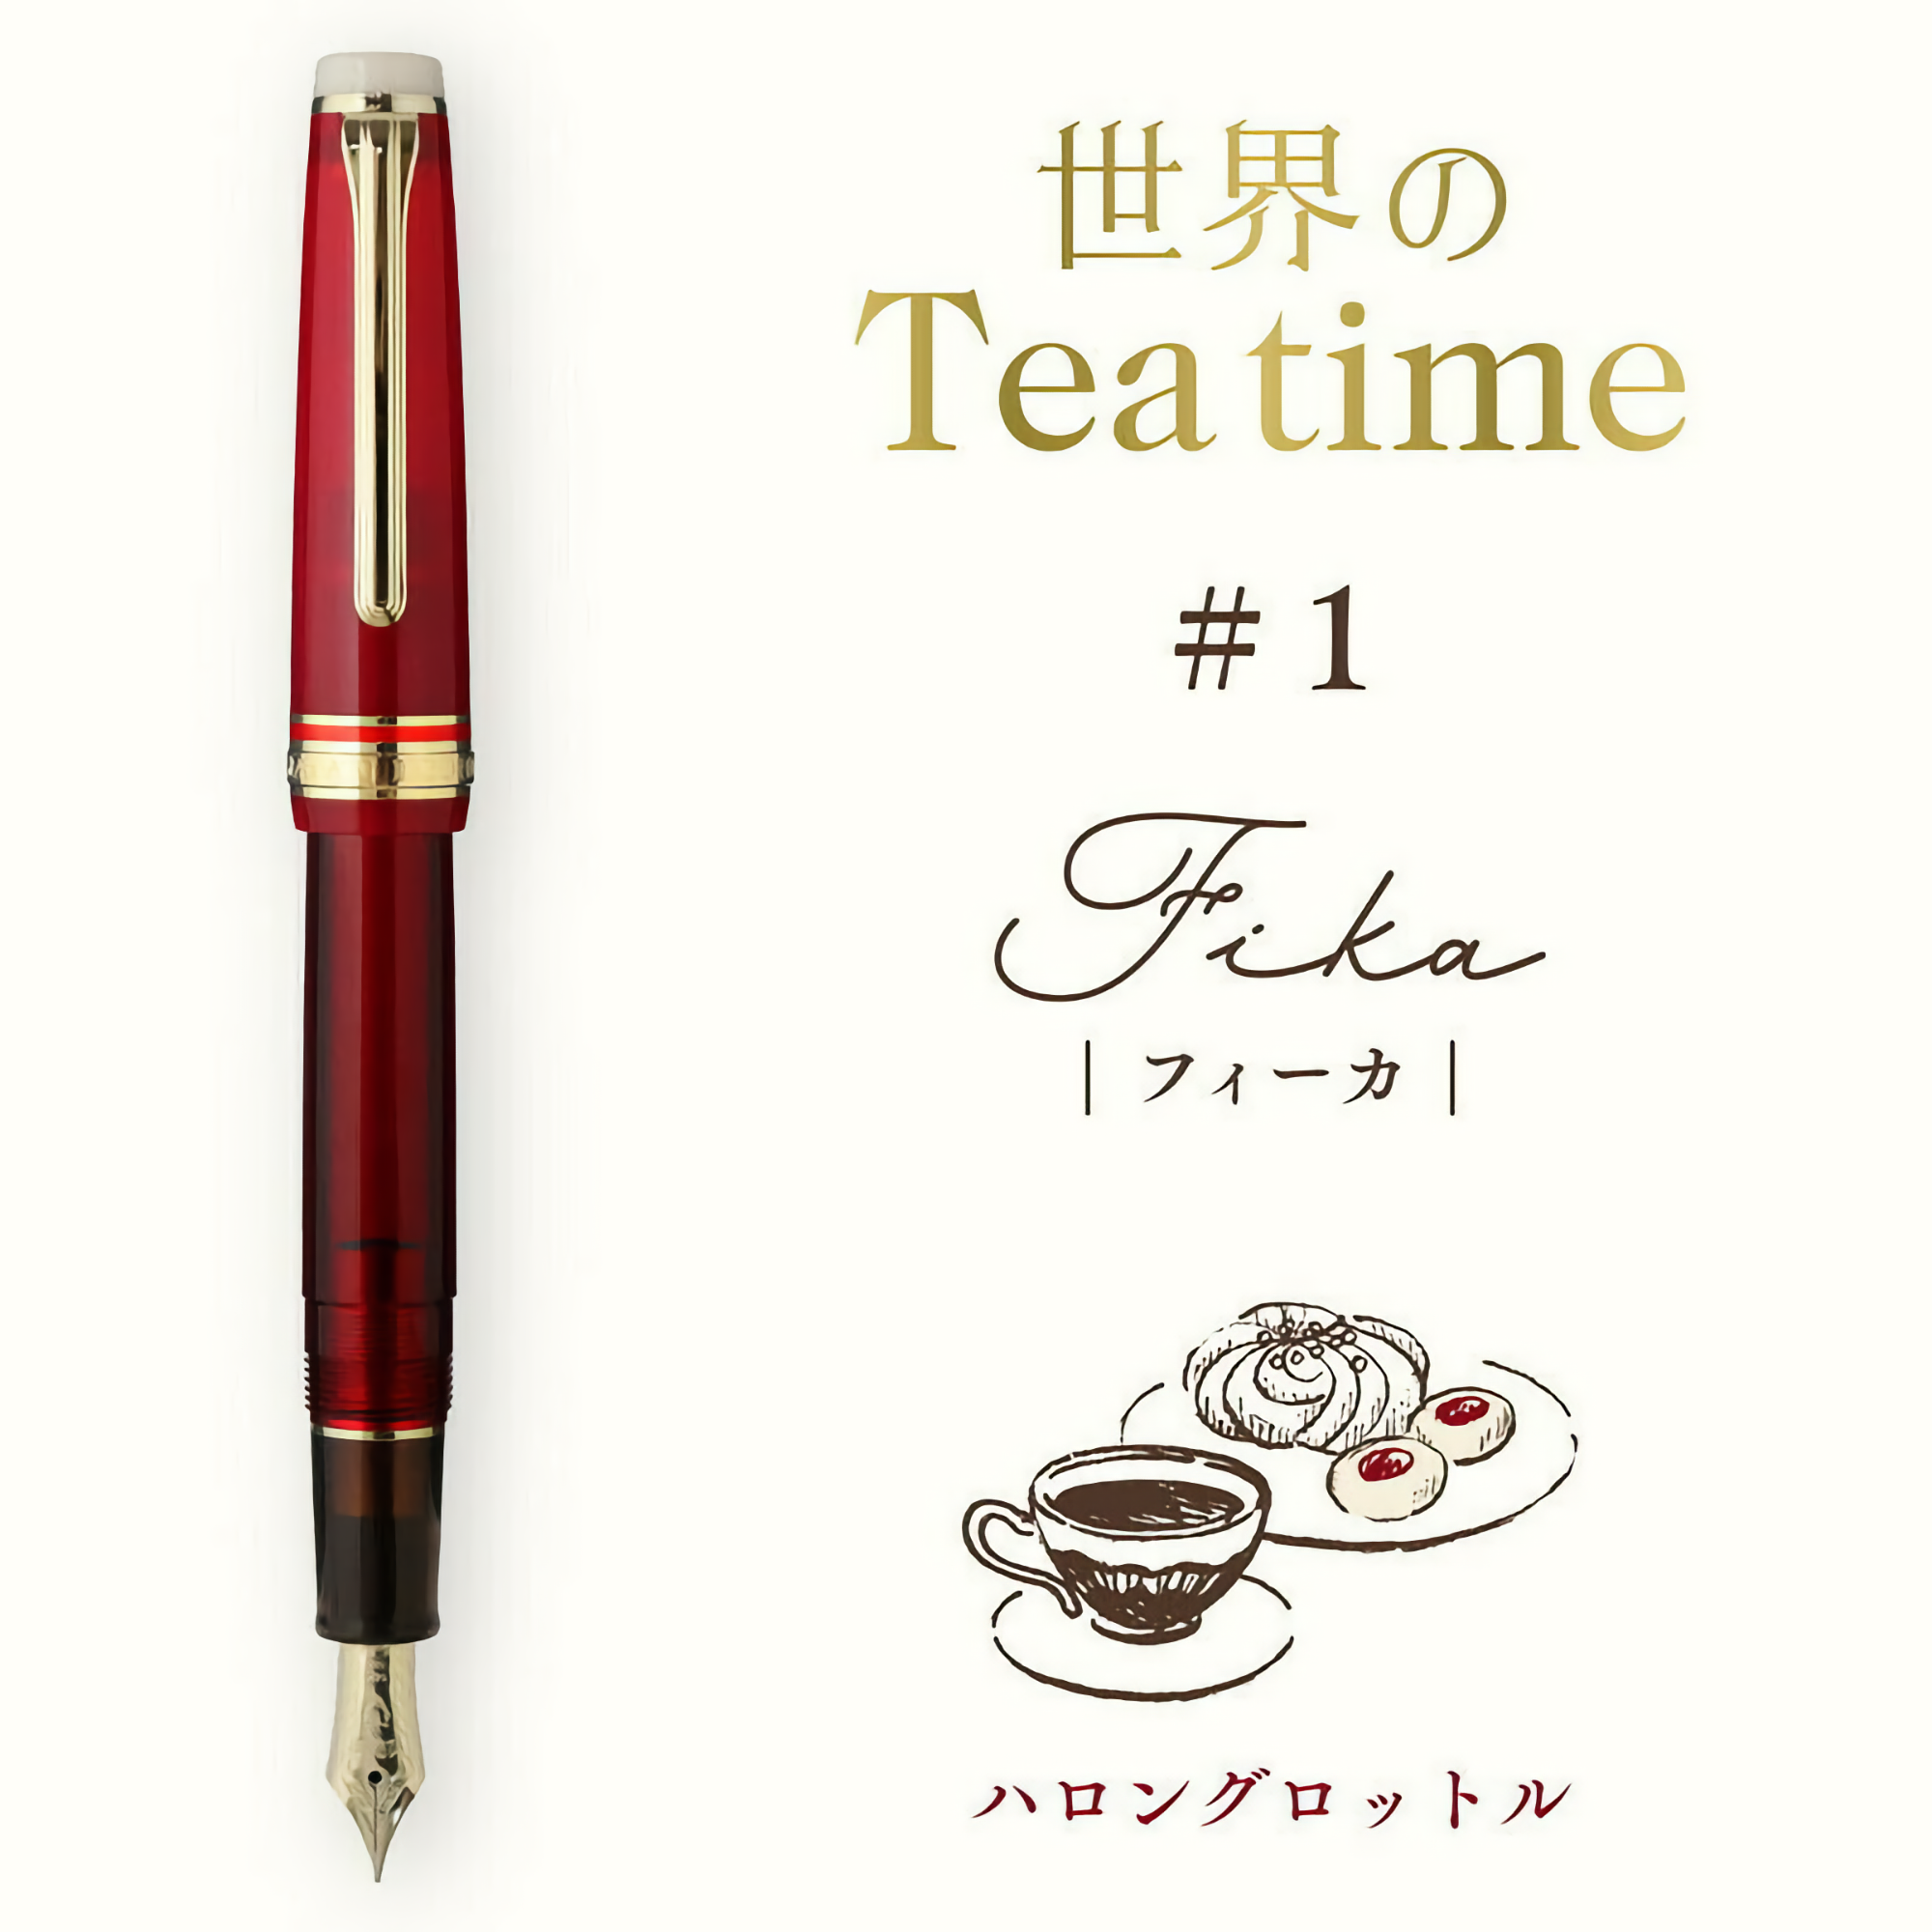 Sailor Professional Gear Slim (Sapporo) – Tea Time Fika Hallongrotta Limited Edition